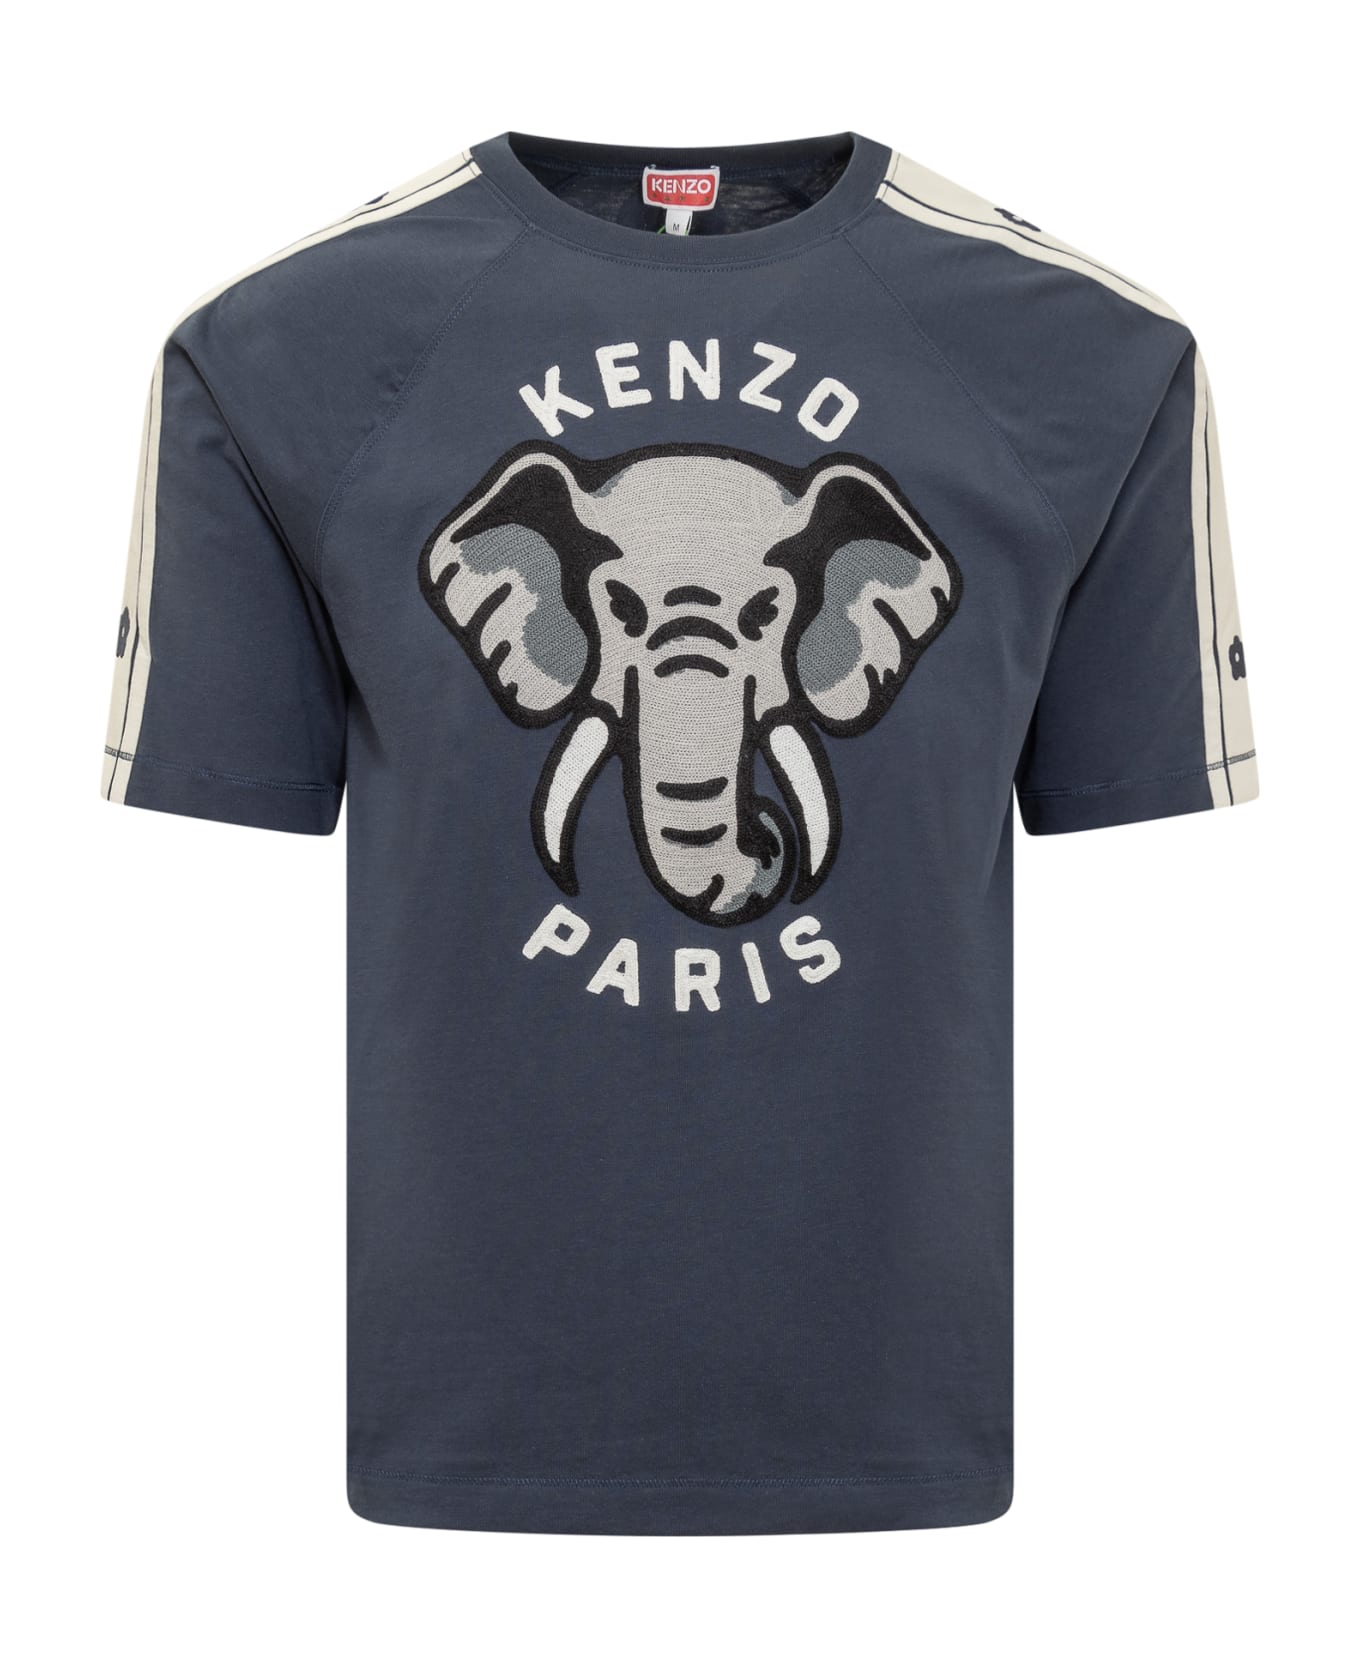 Kenzo 'ken Zo Slim' Cotton T-shirt - Blue